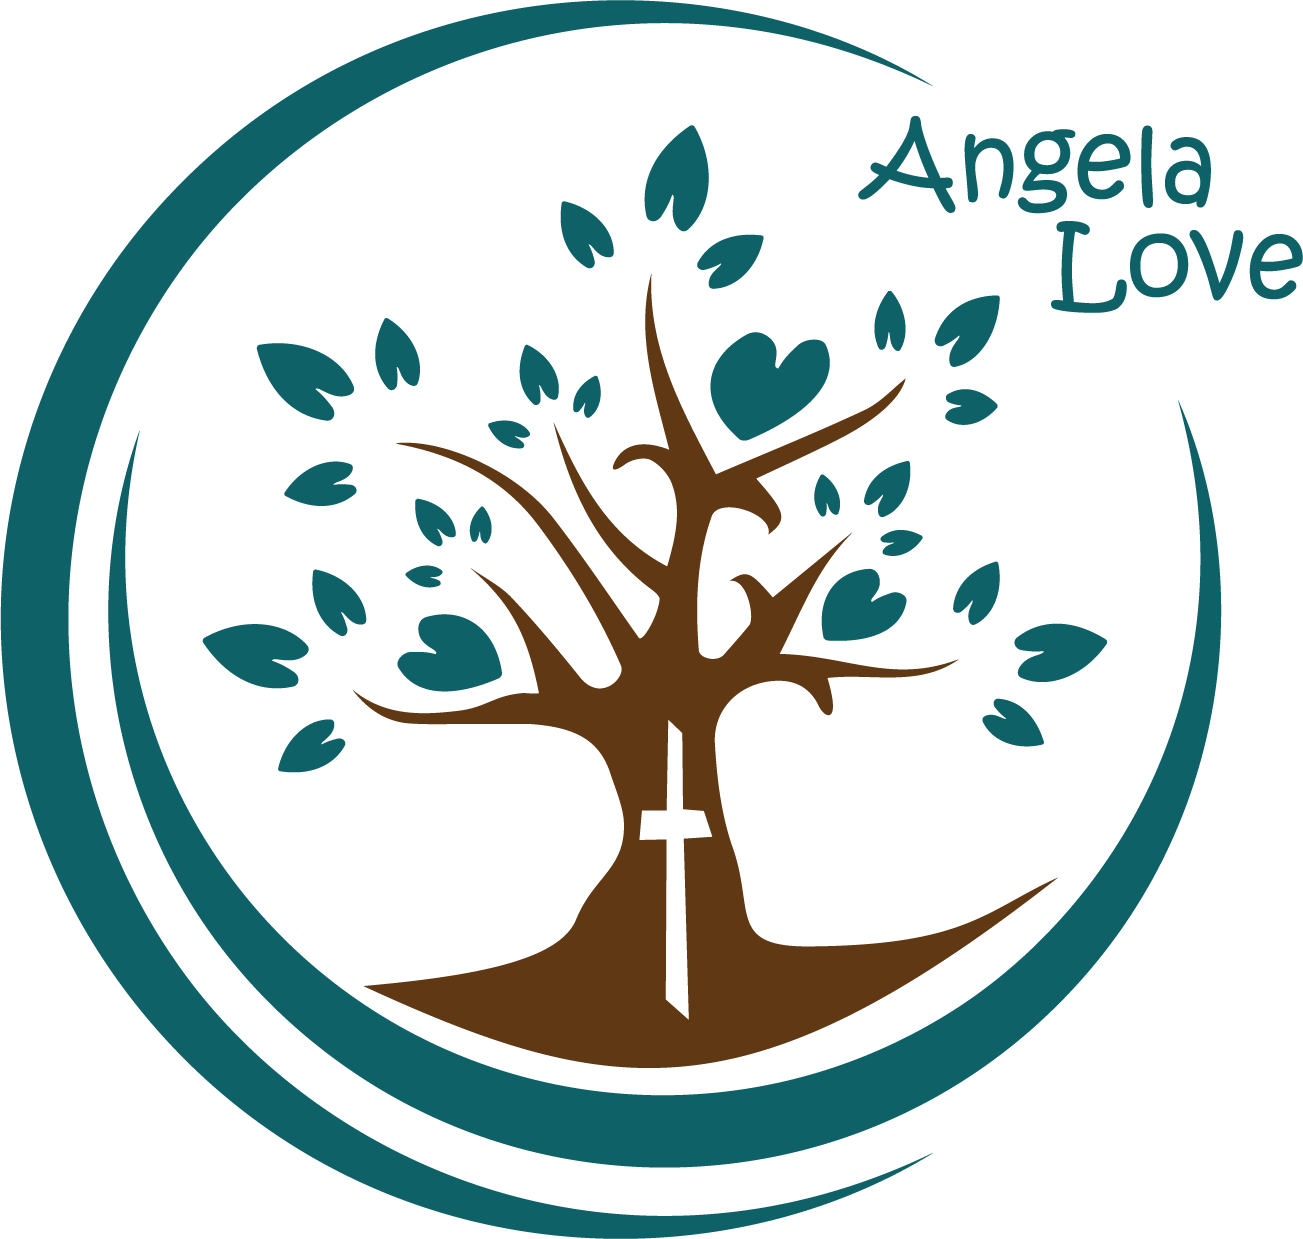 Angela Love